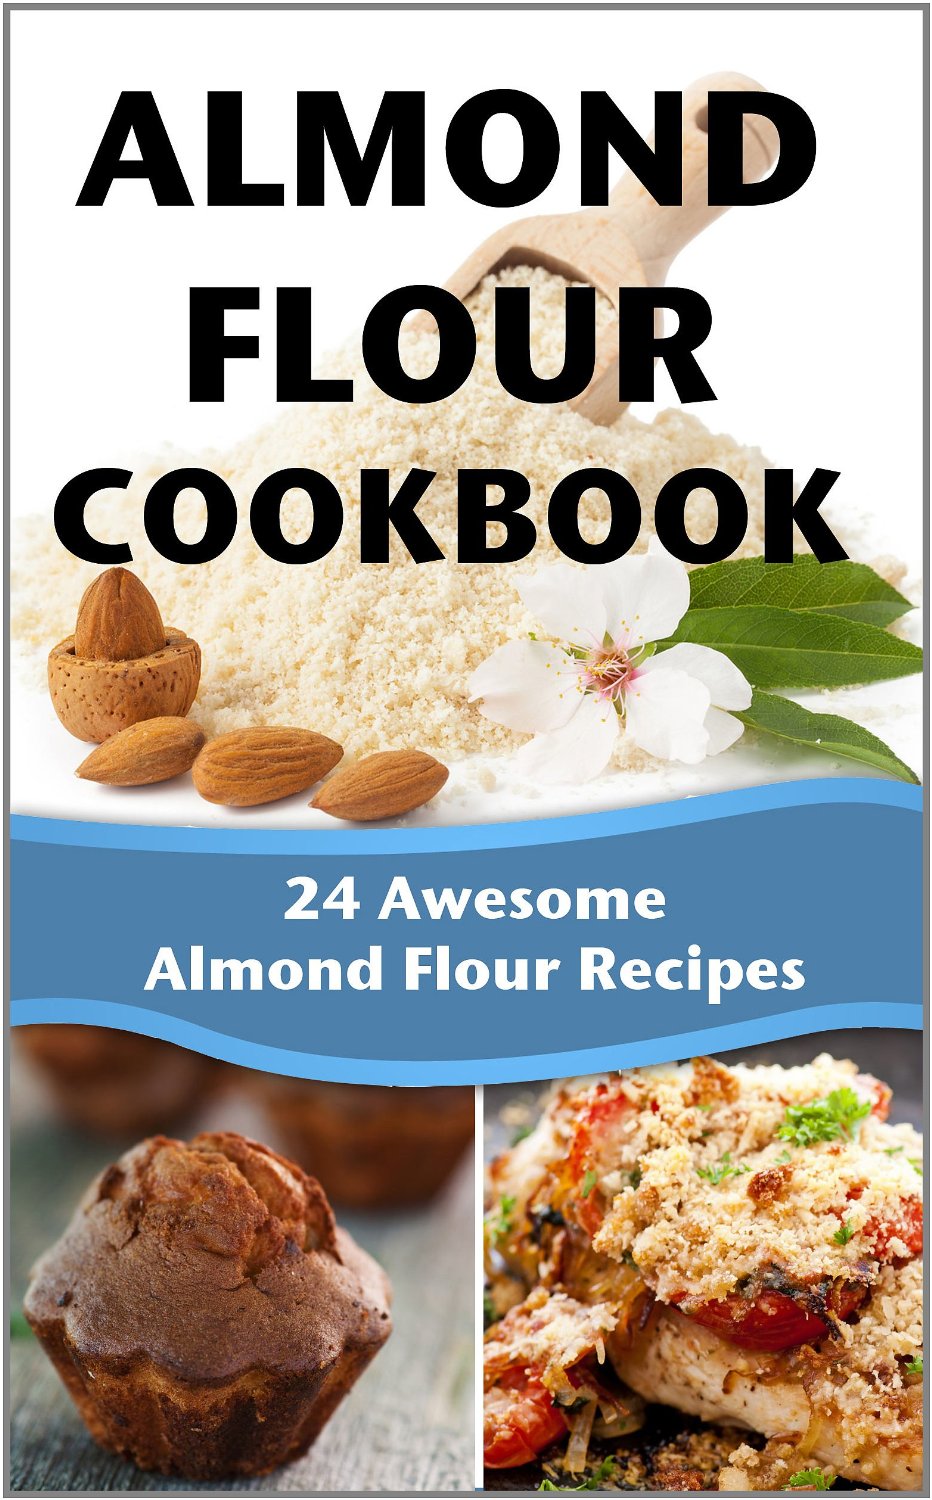 Almond Flour Cookbook by David Martin